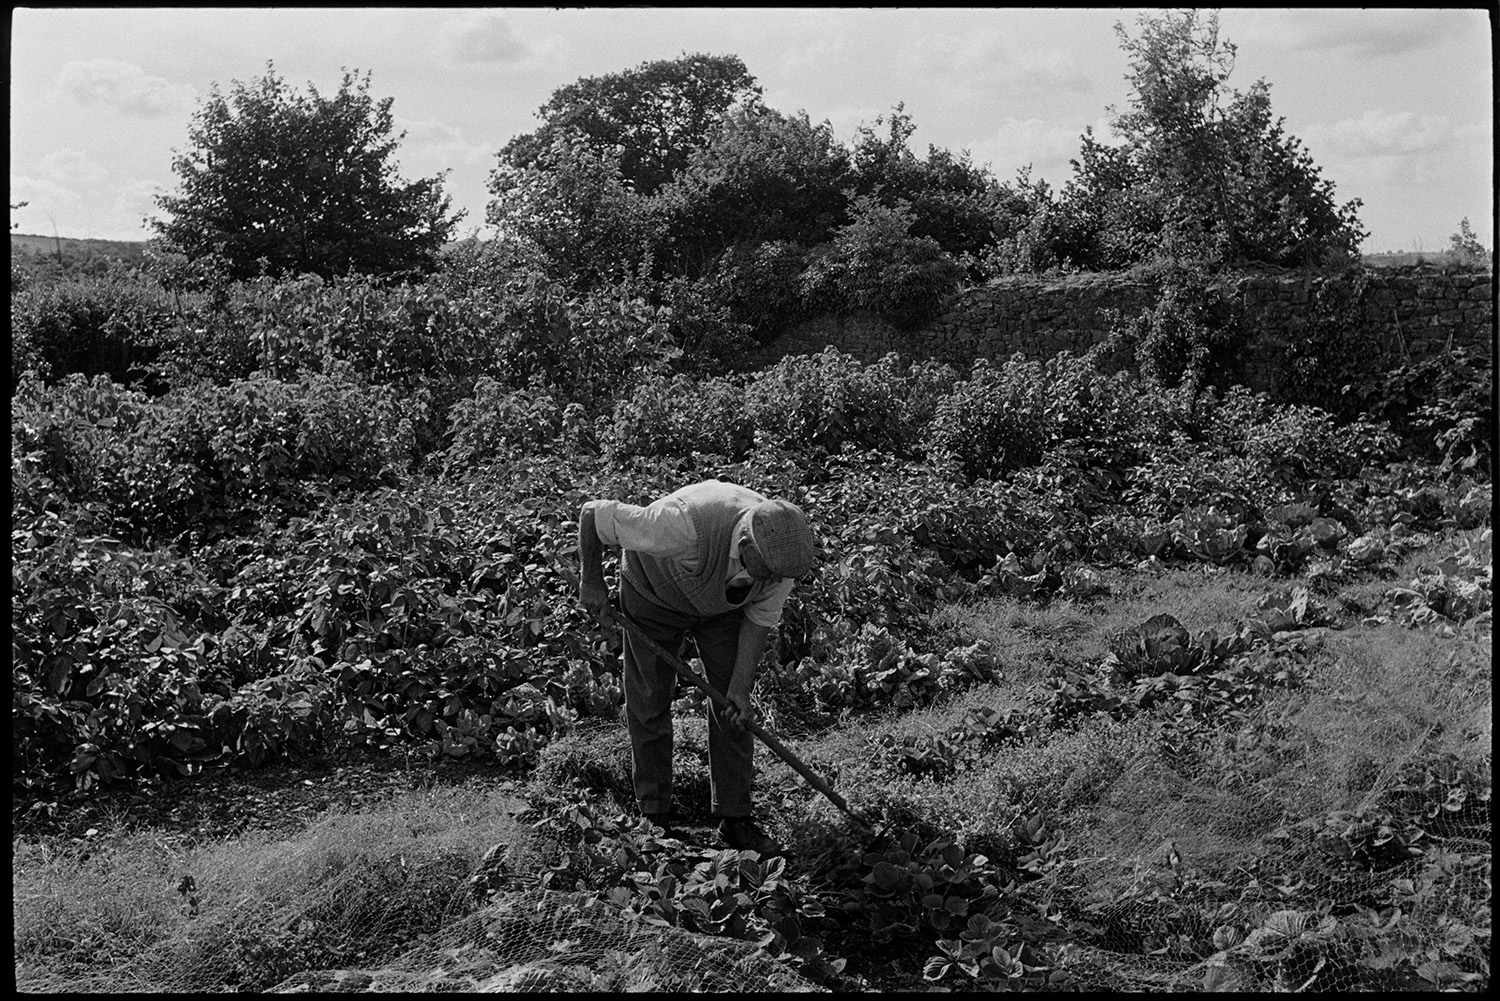 Man hoeing his garden.
[A man hoeing his garden at Rashleigh Barton, Chulmleigh. It was later bought by Lord O'Hagan.]